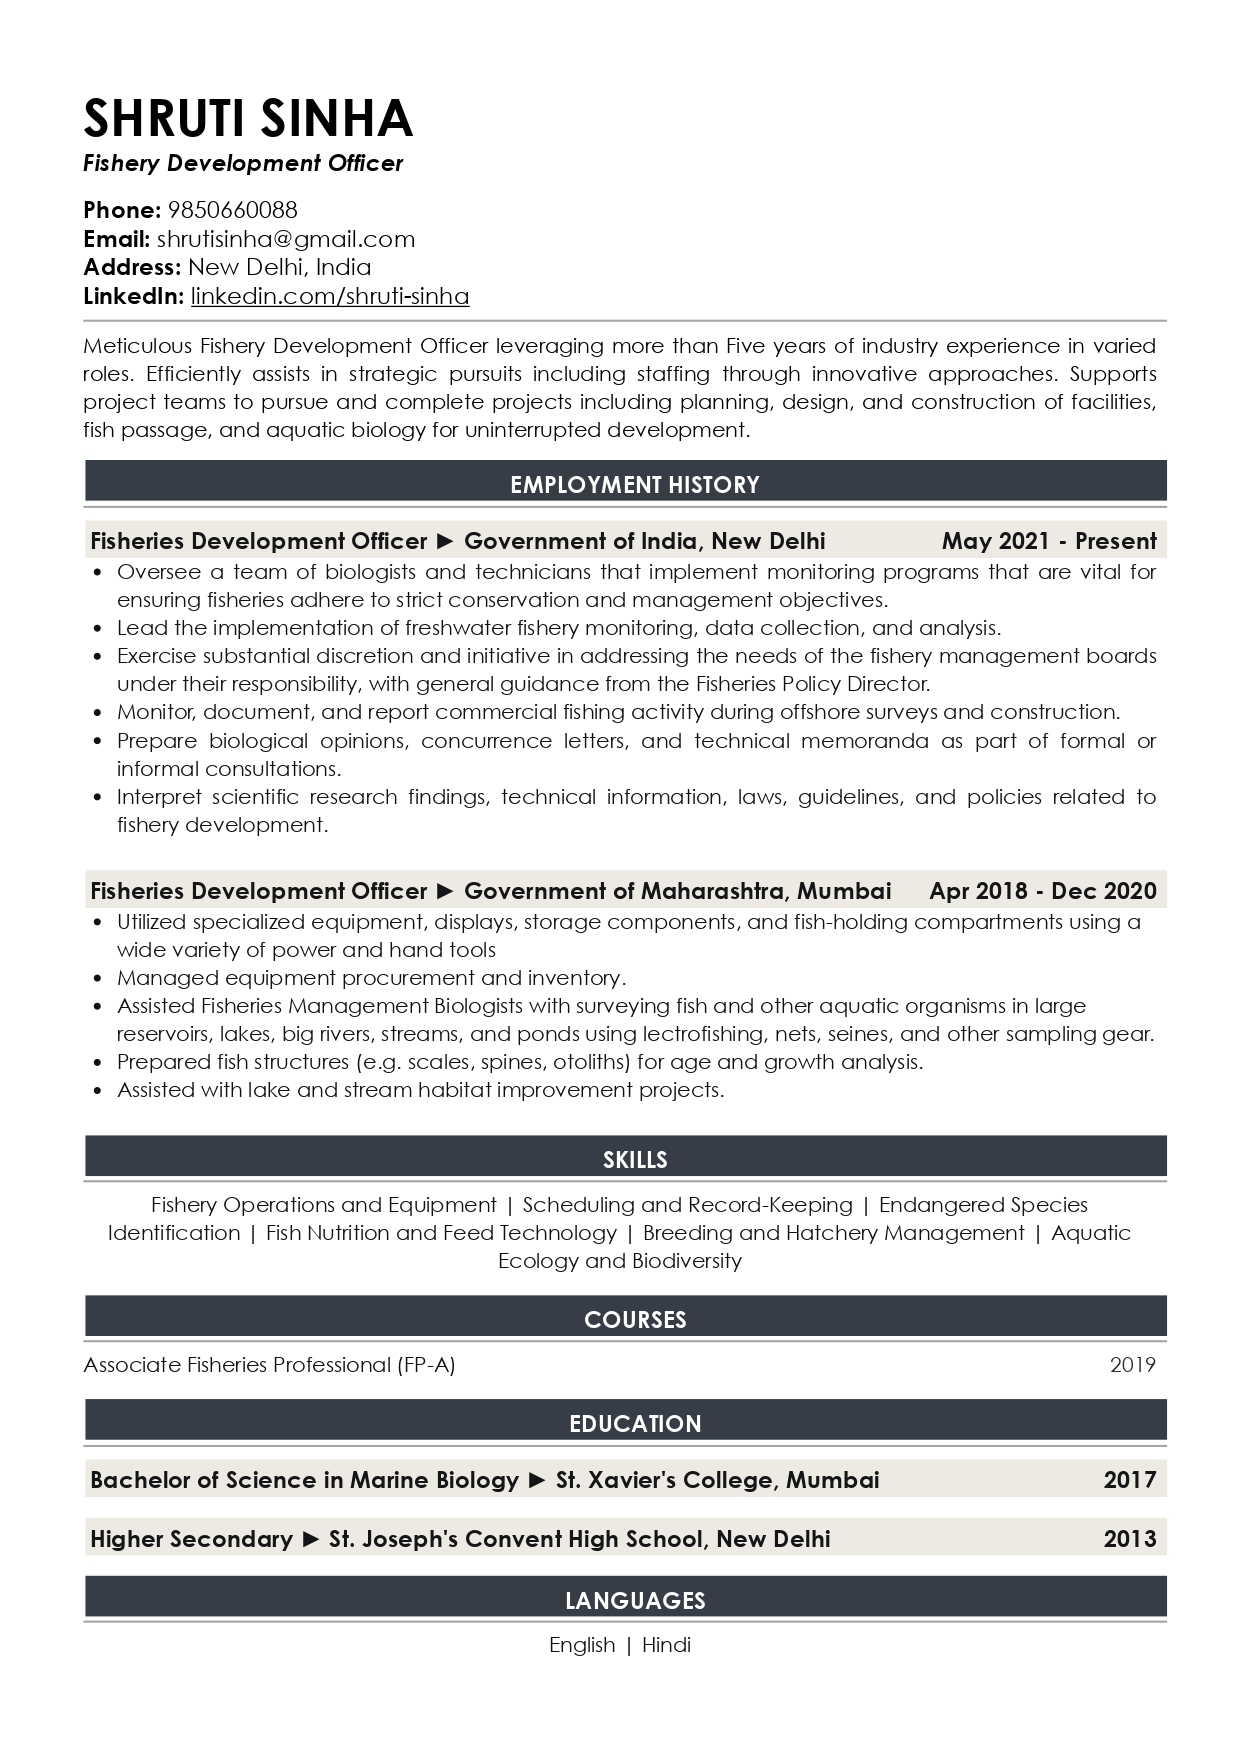 Sample Resume of Fishery Development Officer | Free Resume Templates & Samples on Resumod.co